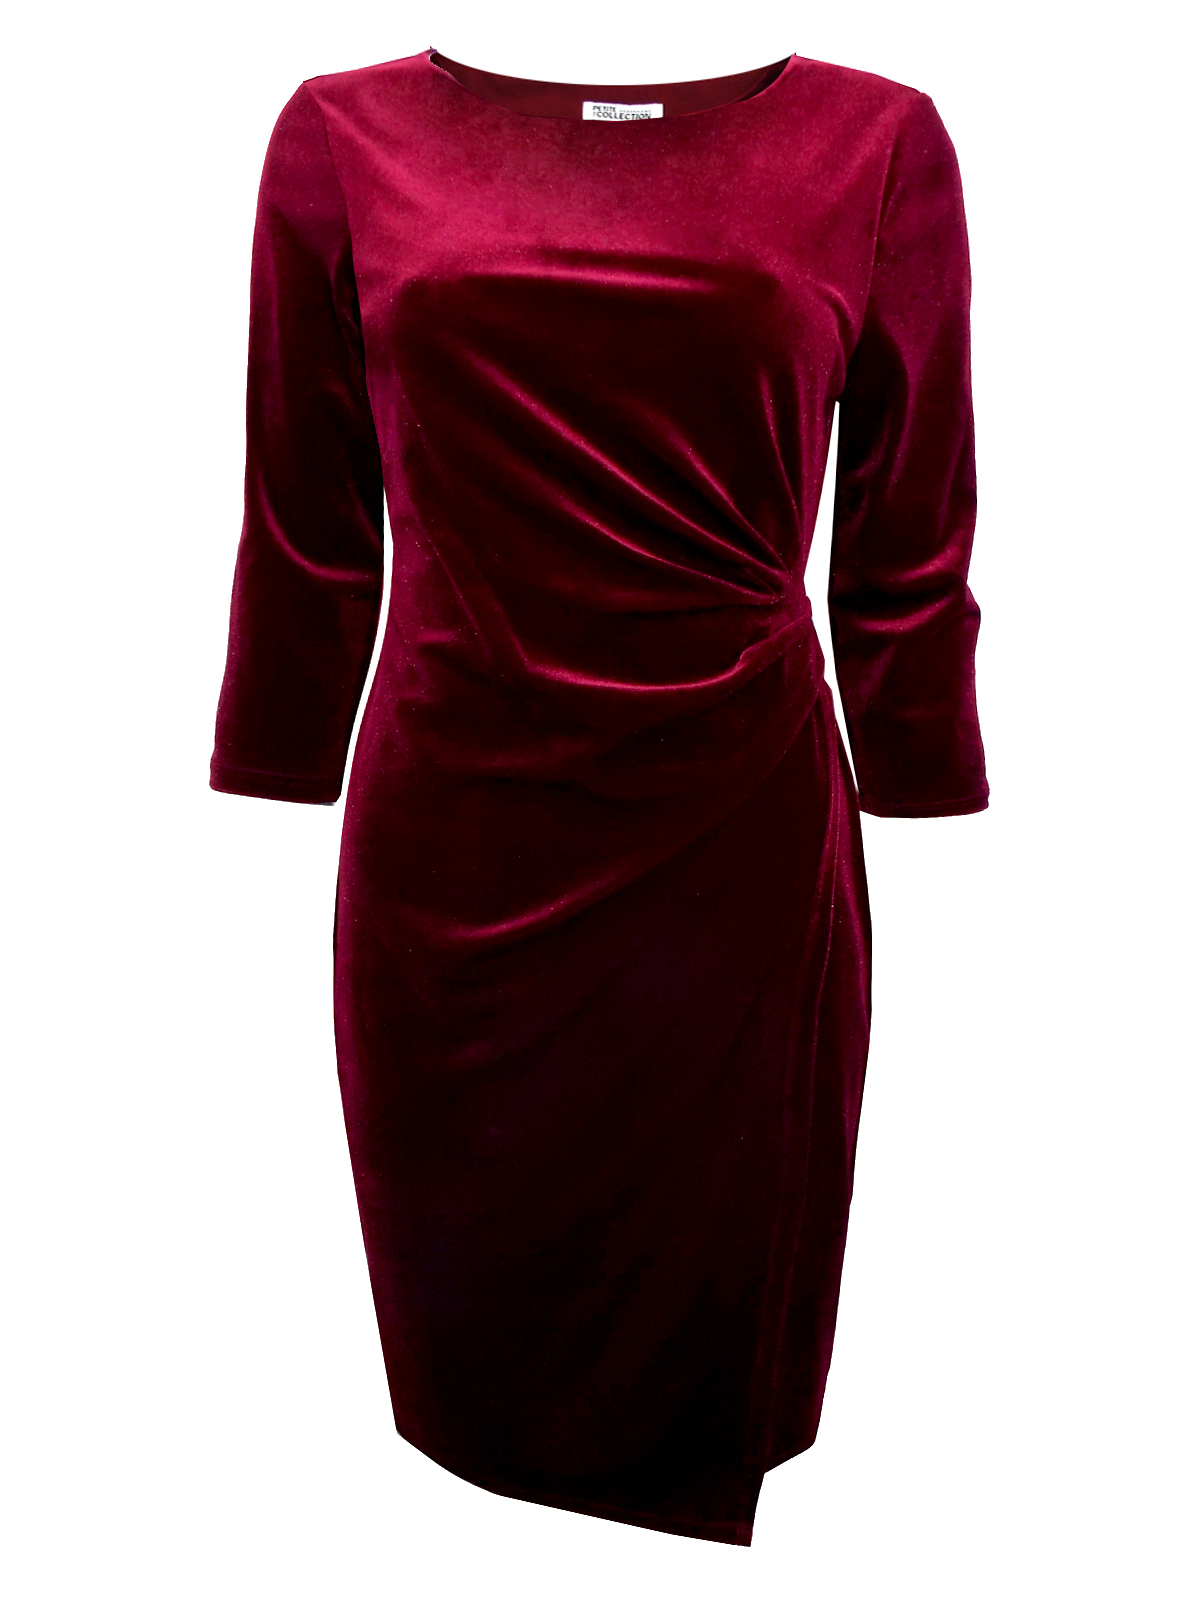 Debenhams - - D3benhams WINE Velvet Wrap Waist Dress - Size 10 to 16